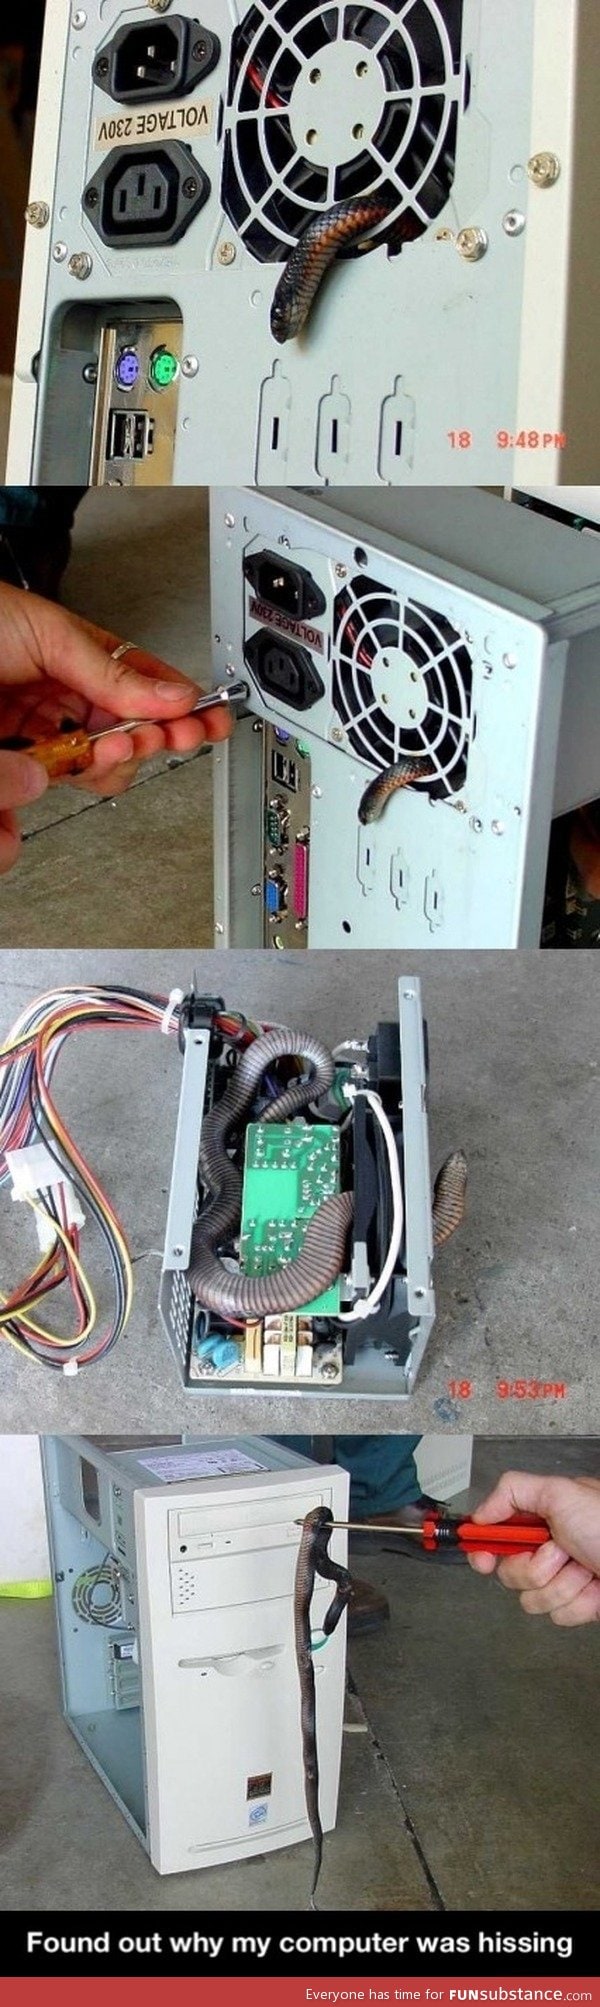 Fixing computer